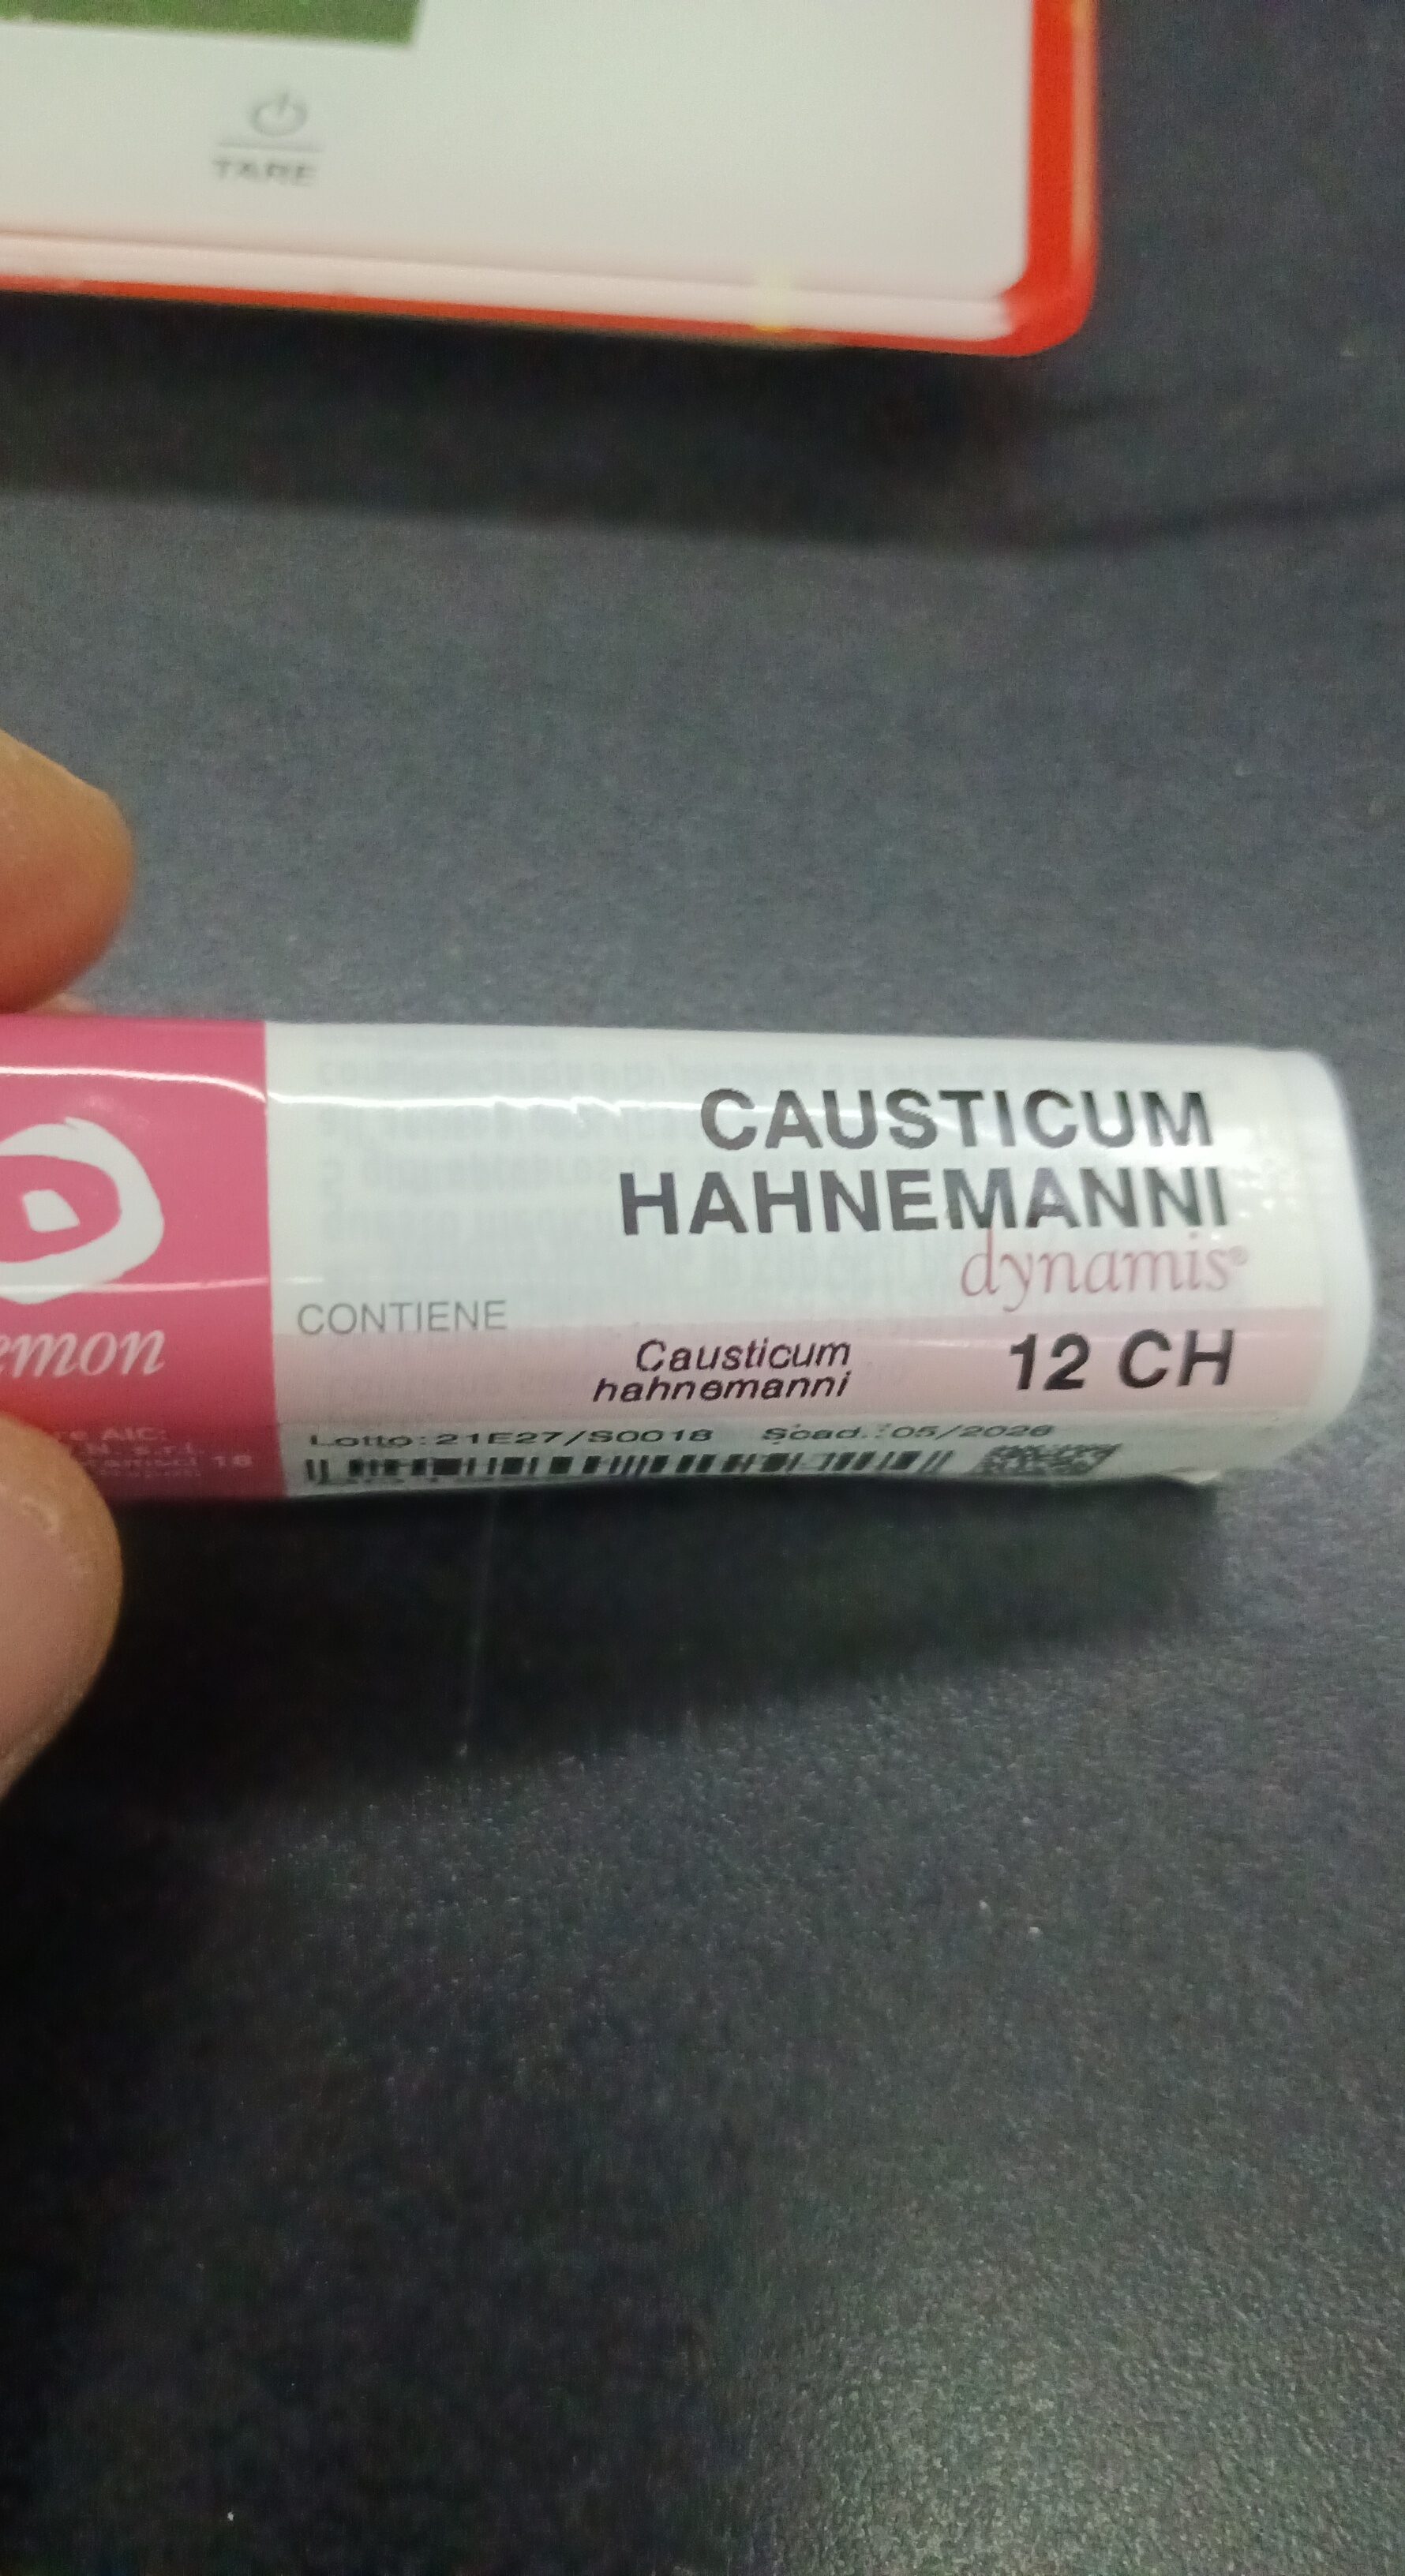 CAUsticum hahnemanni 12CH - Product - it